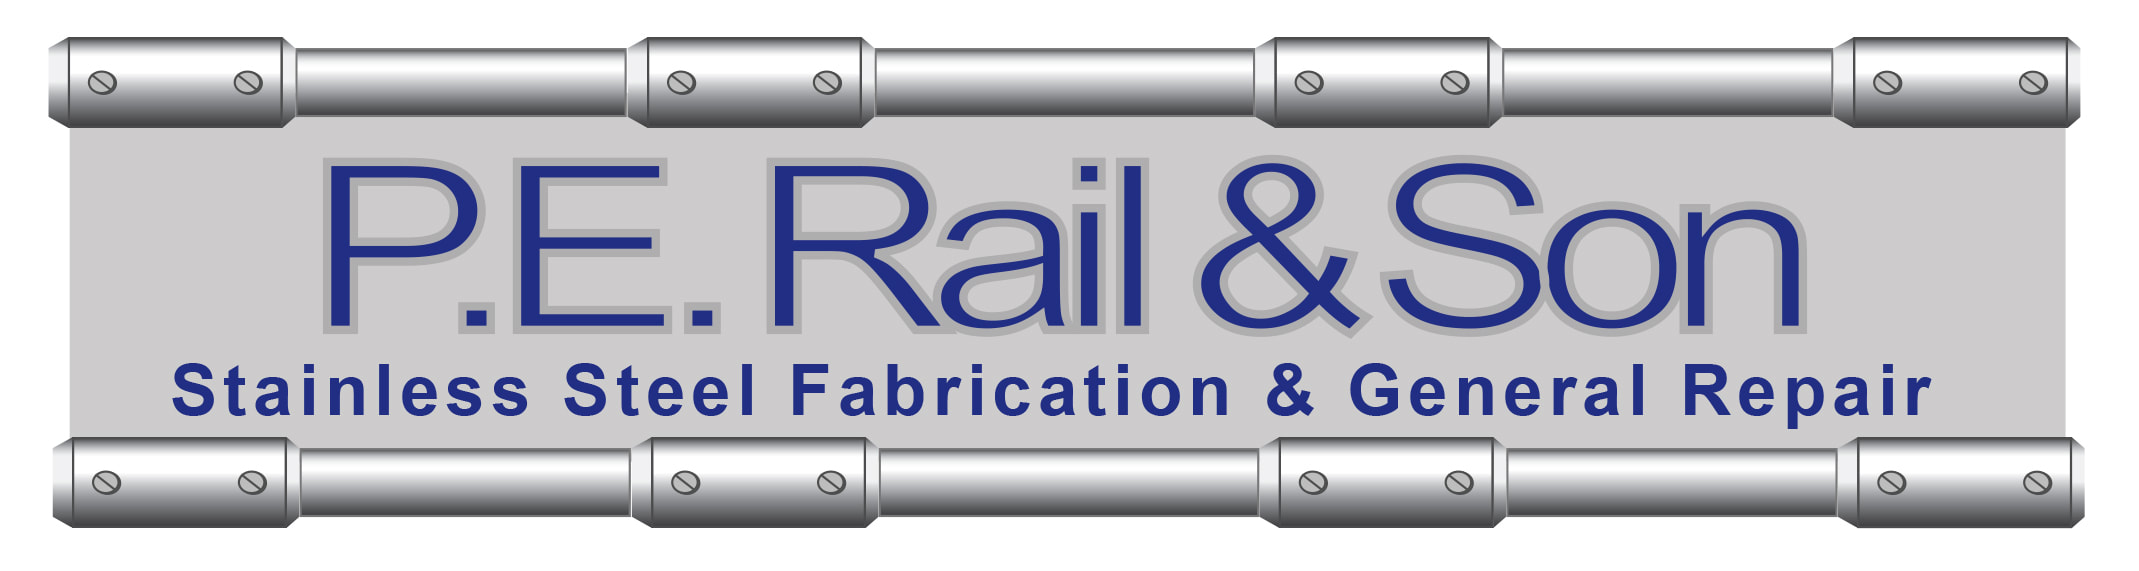 P.E. Rail & Son Metal Fabrication